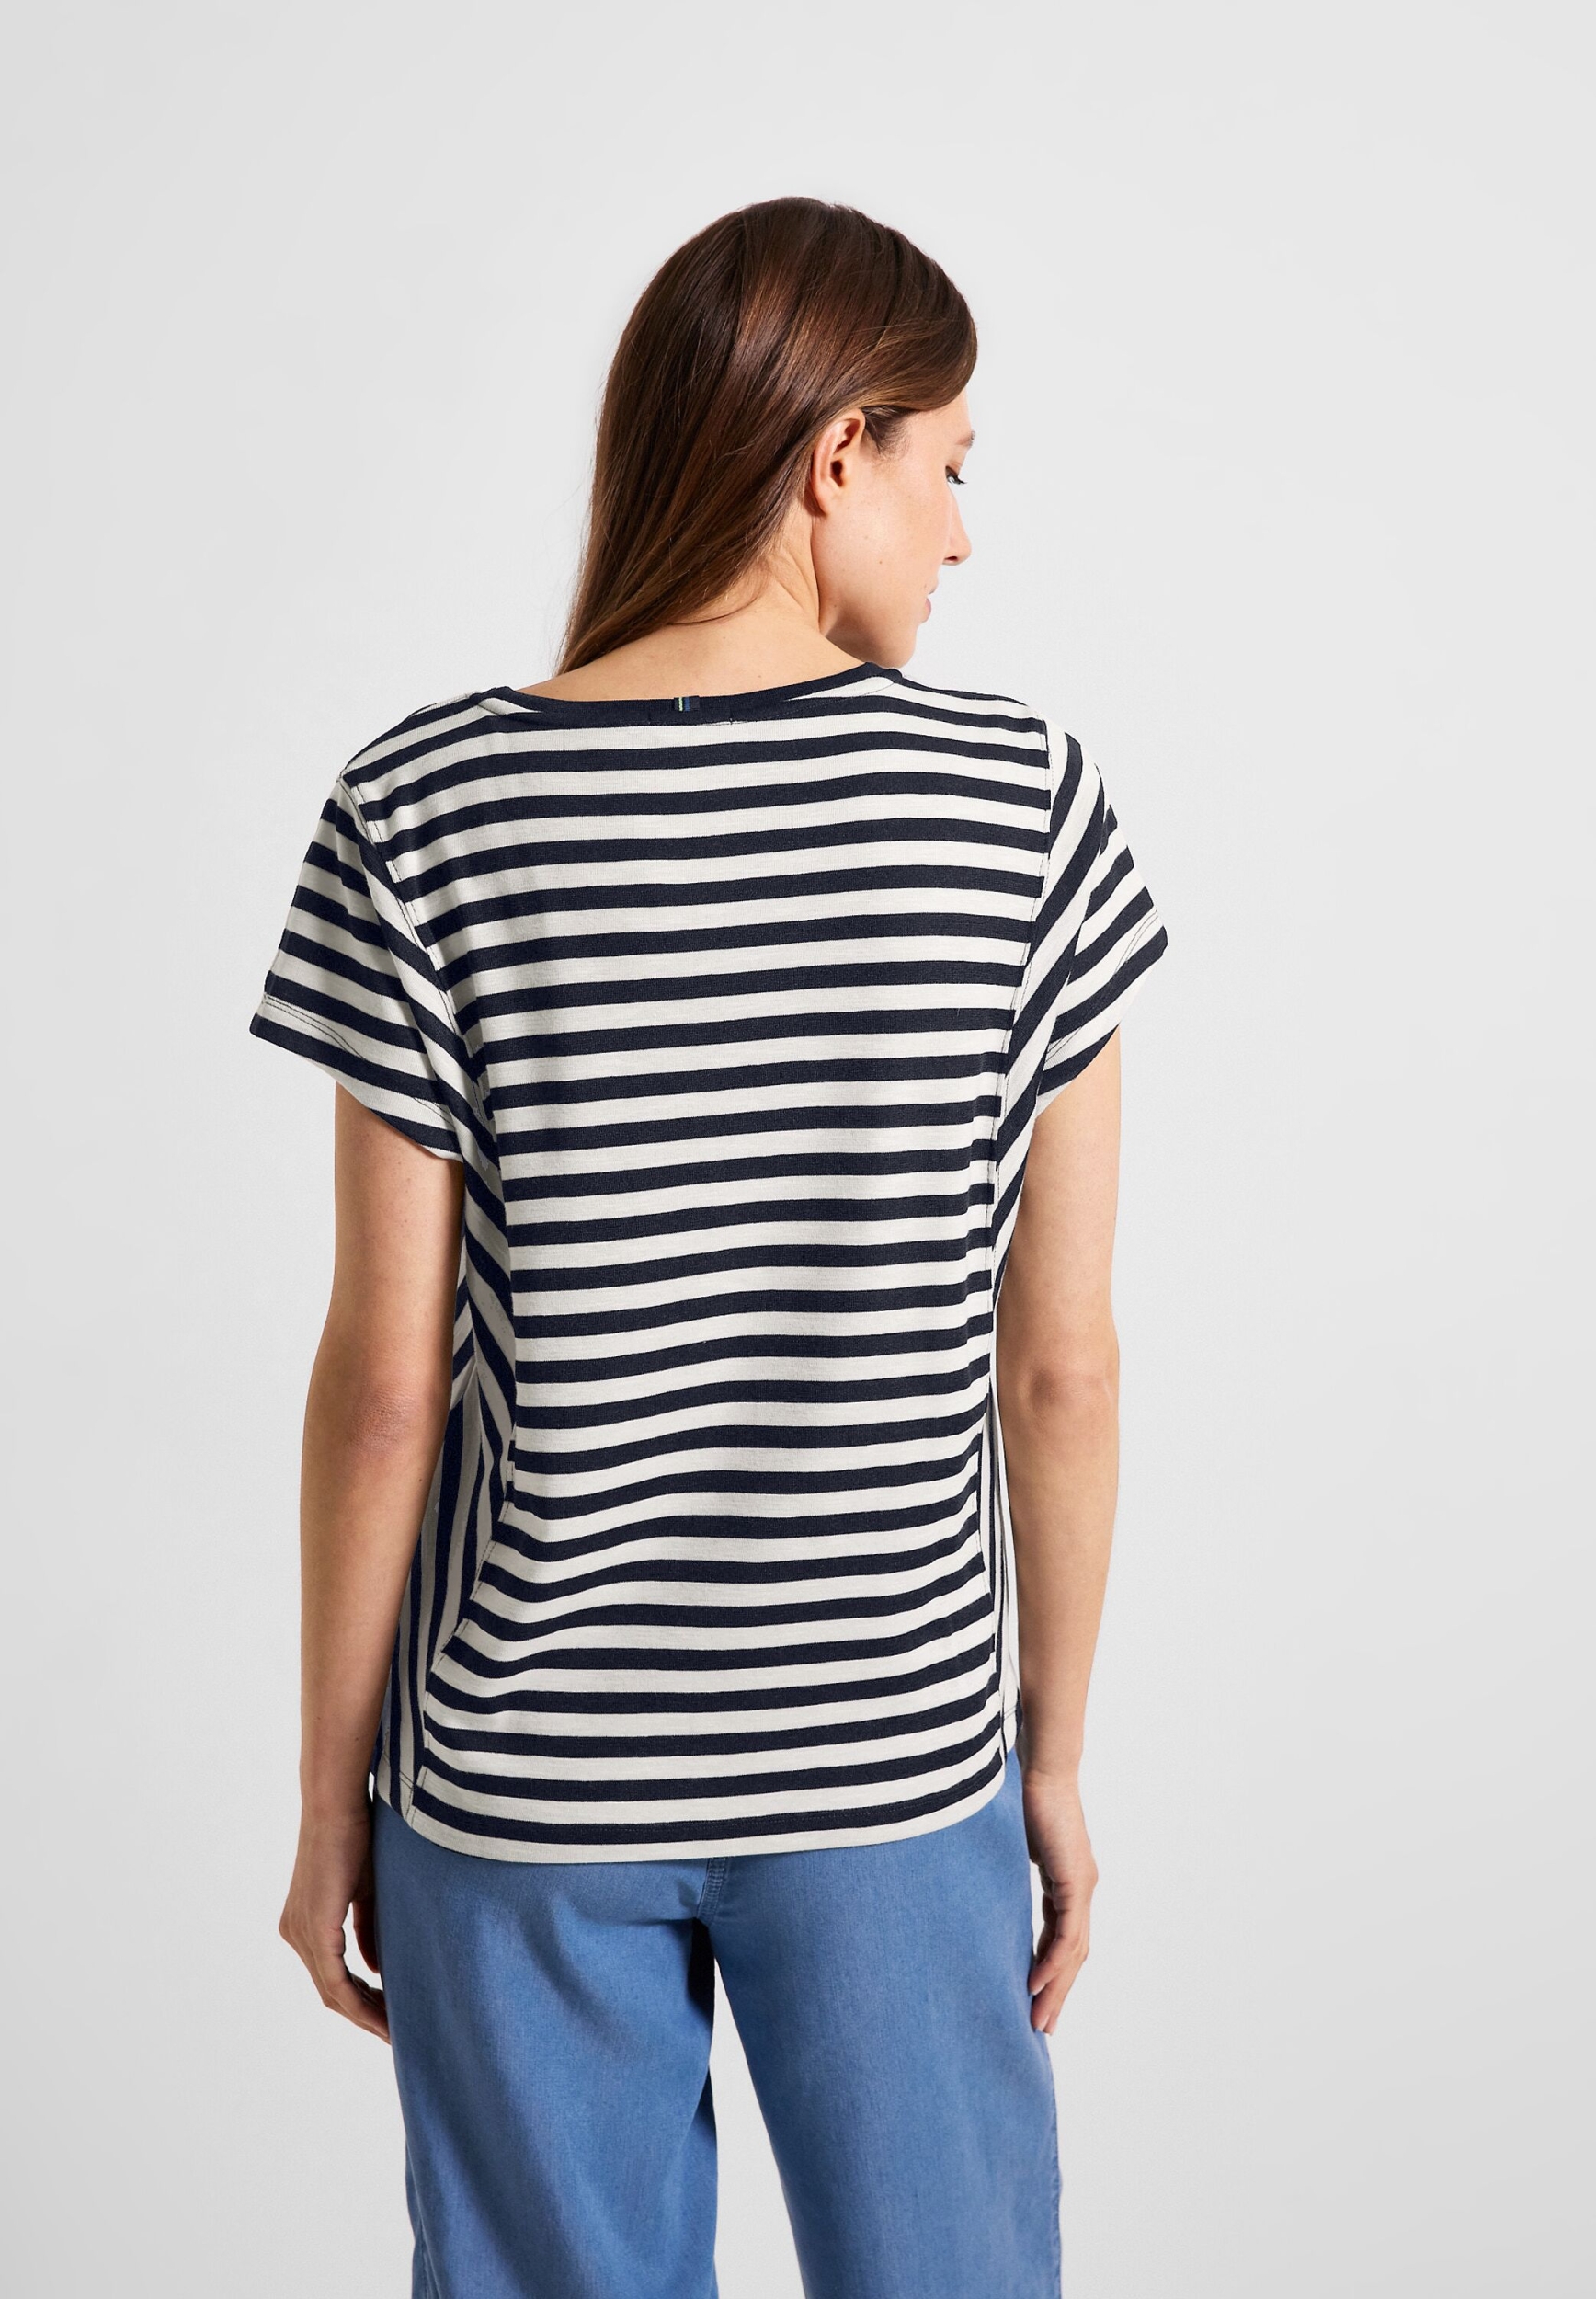 | T-Shirt patched stripes deep B320180-20128-L blue | L |